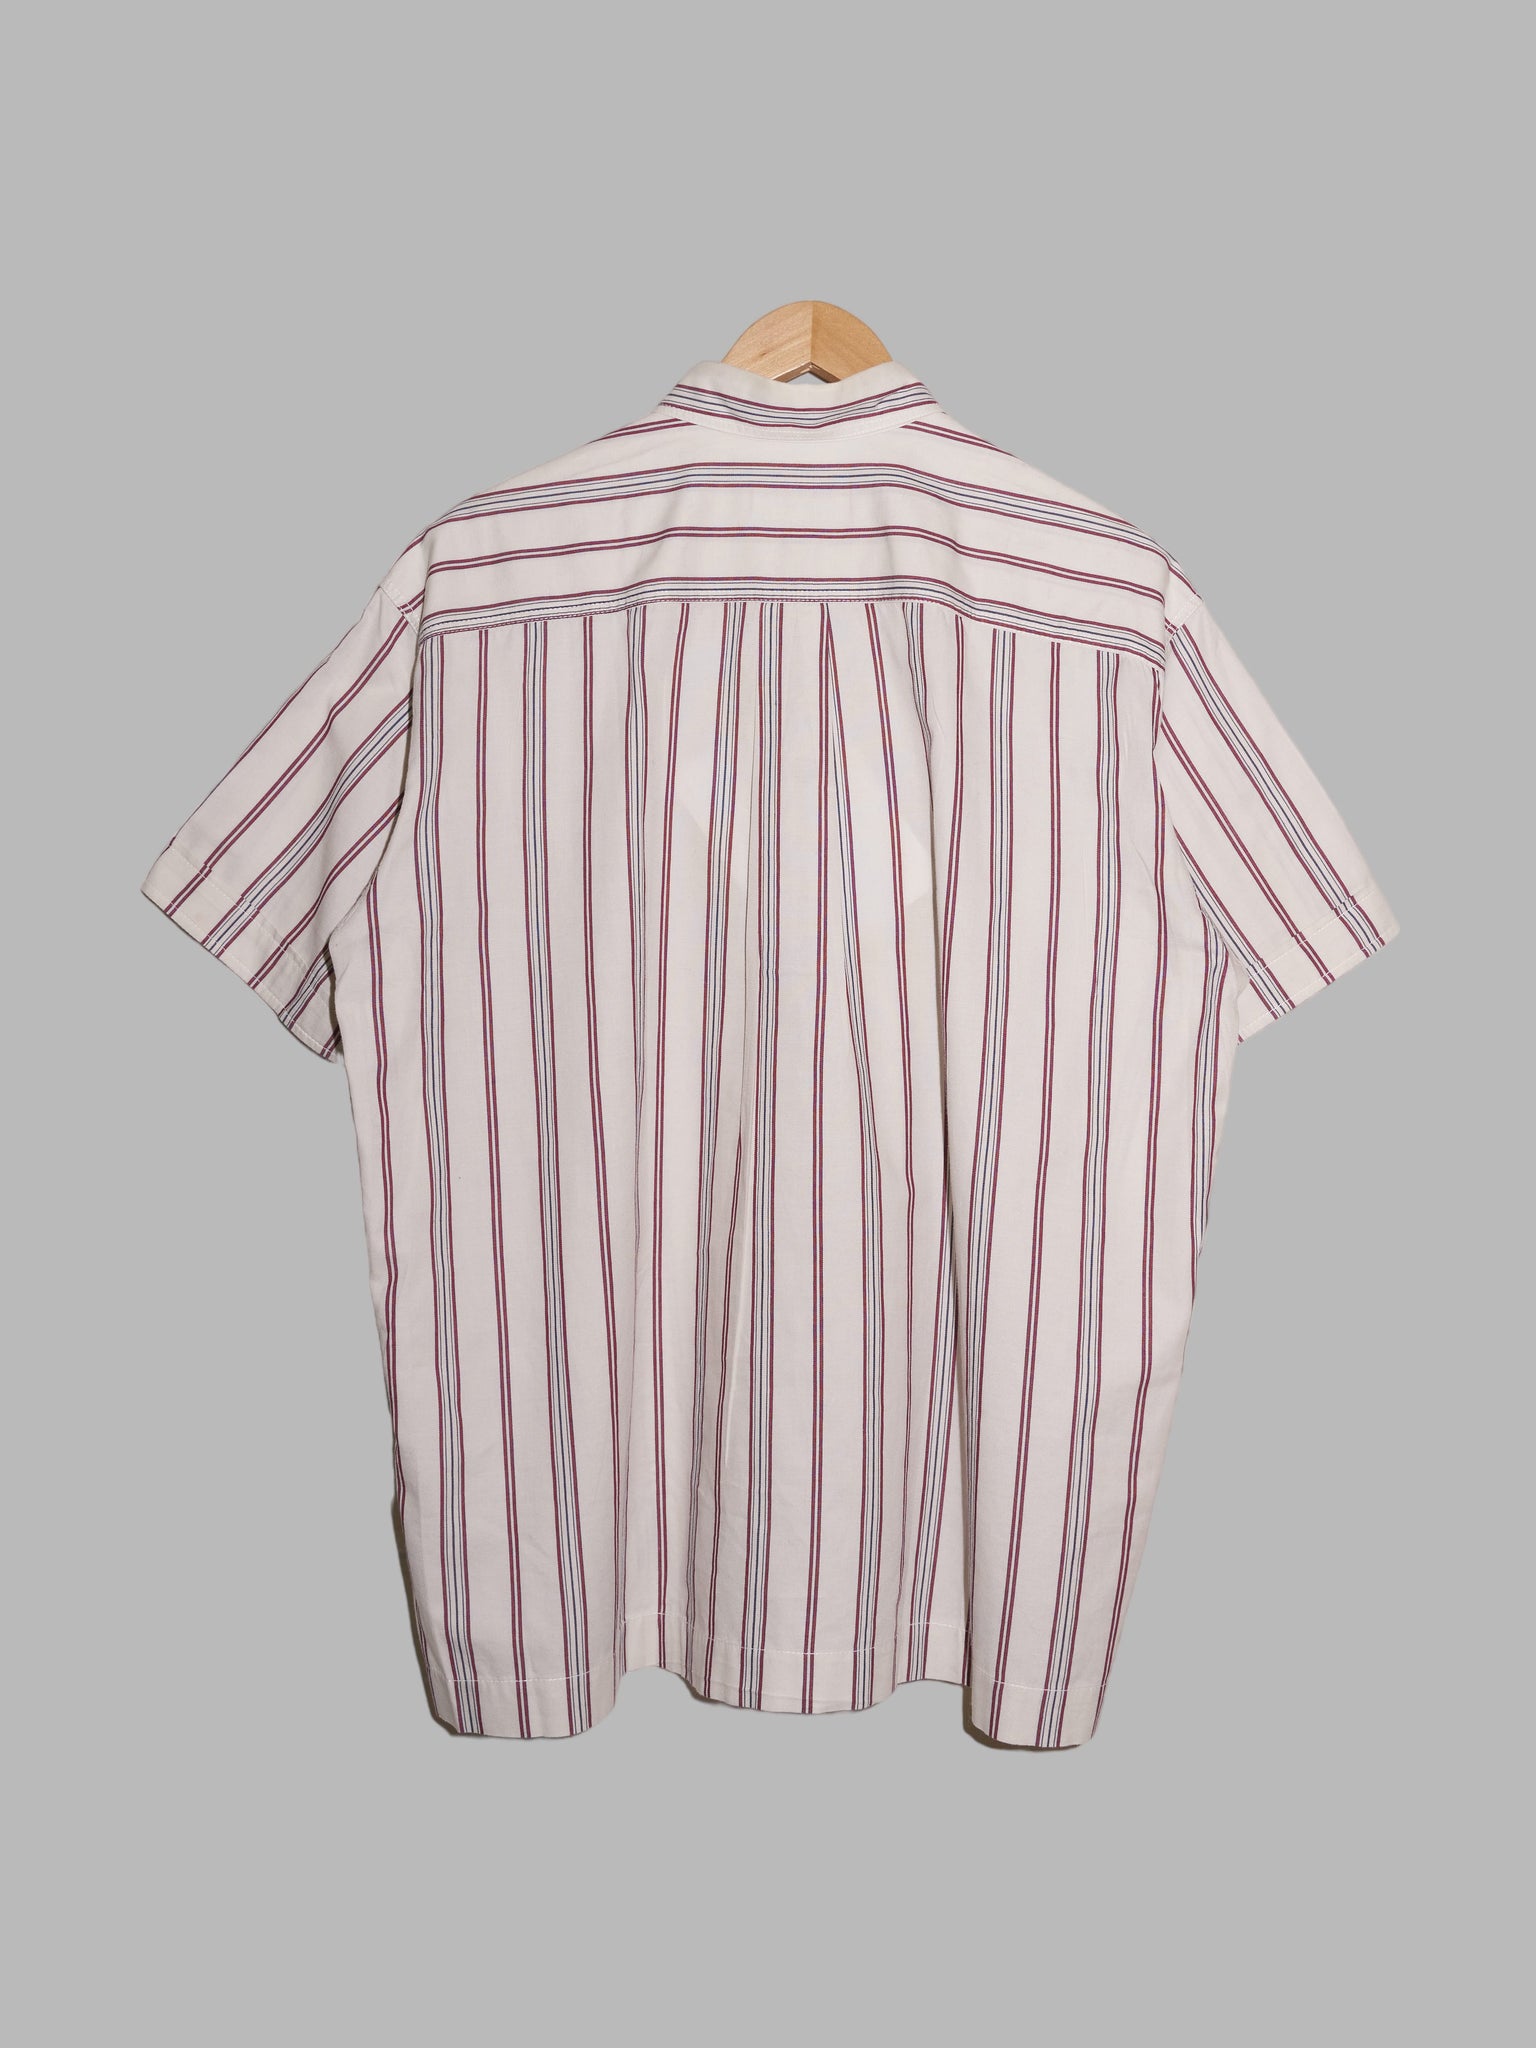 Nigel Cabourn 1990s white cotton striped short sleeve shirt